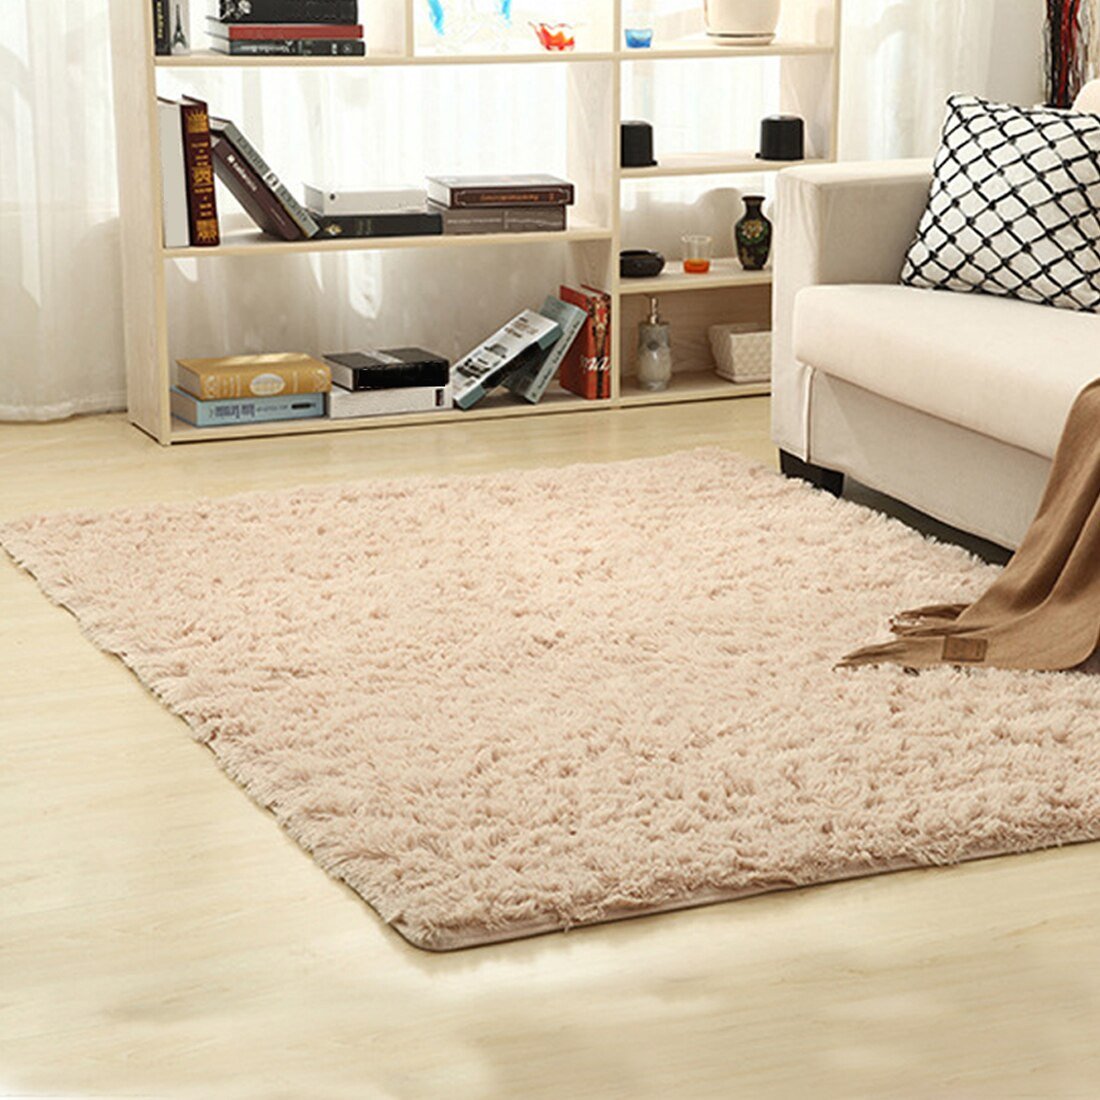 Shaggy Living Room Rugs
 Soft Shaggy Carpet For Living Room Home Warm Plush Floor